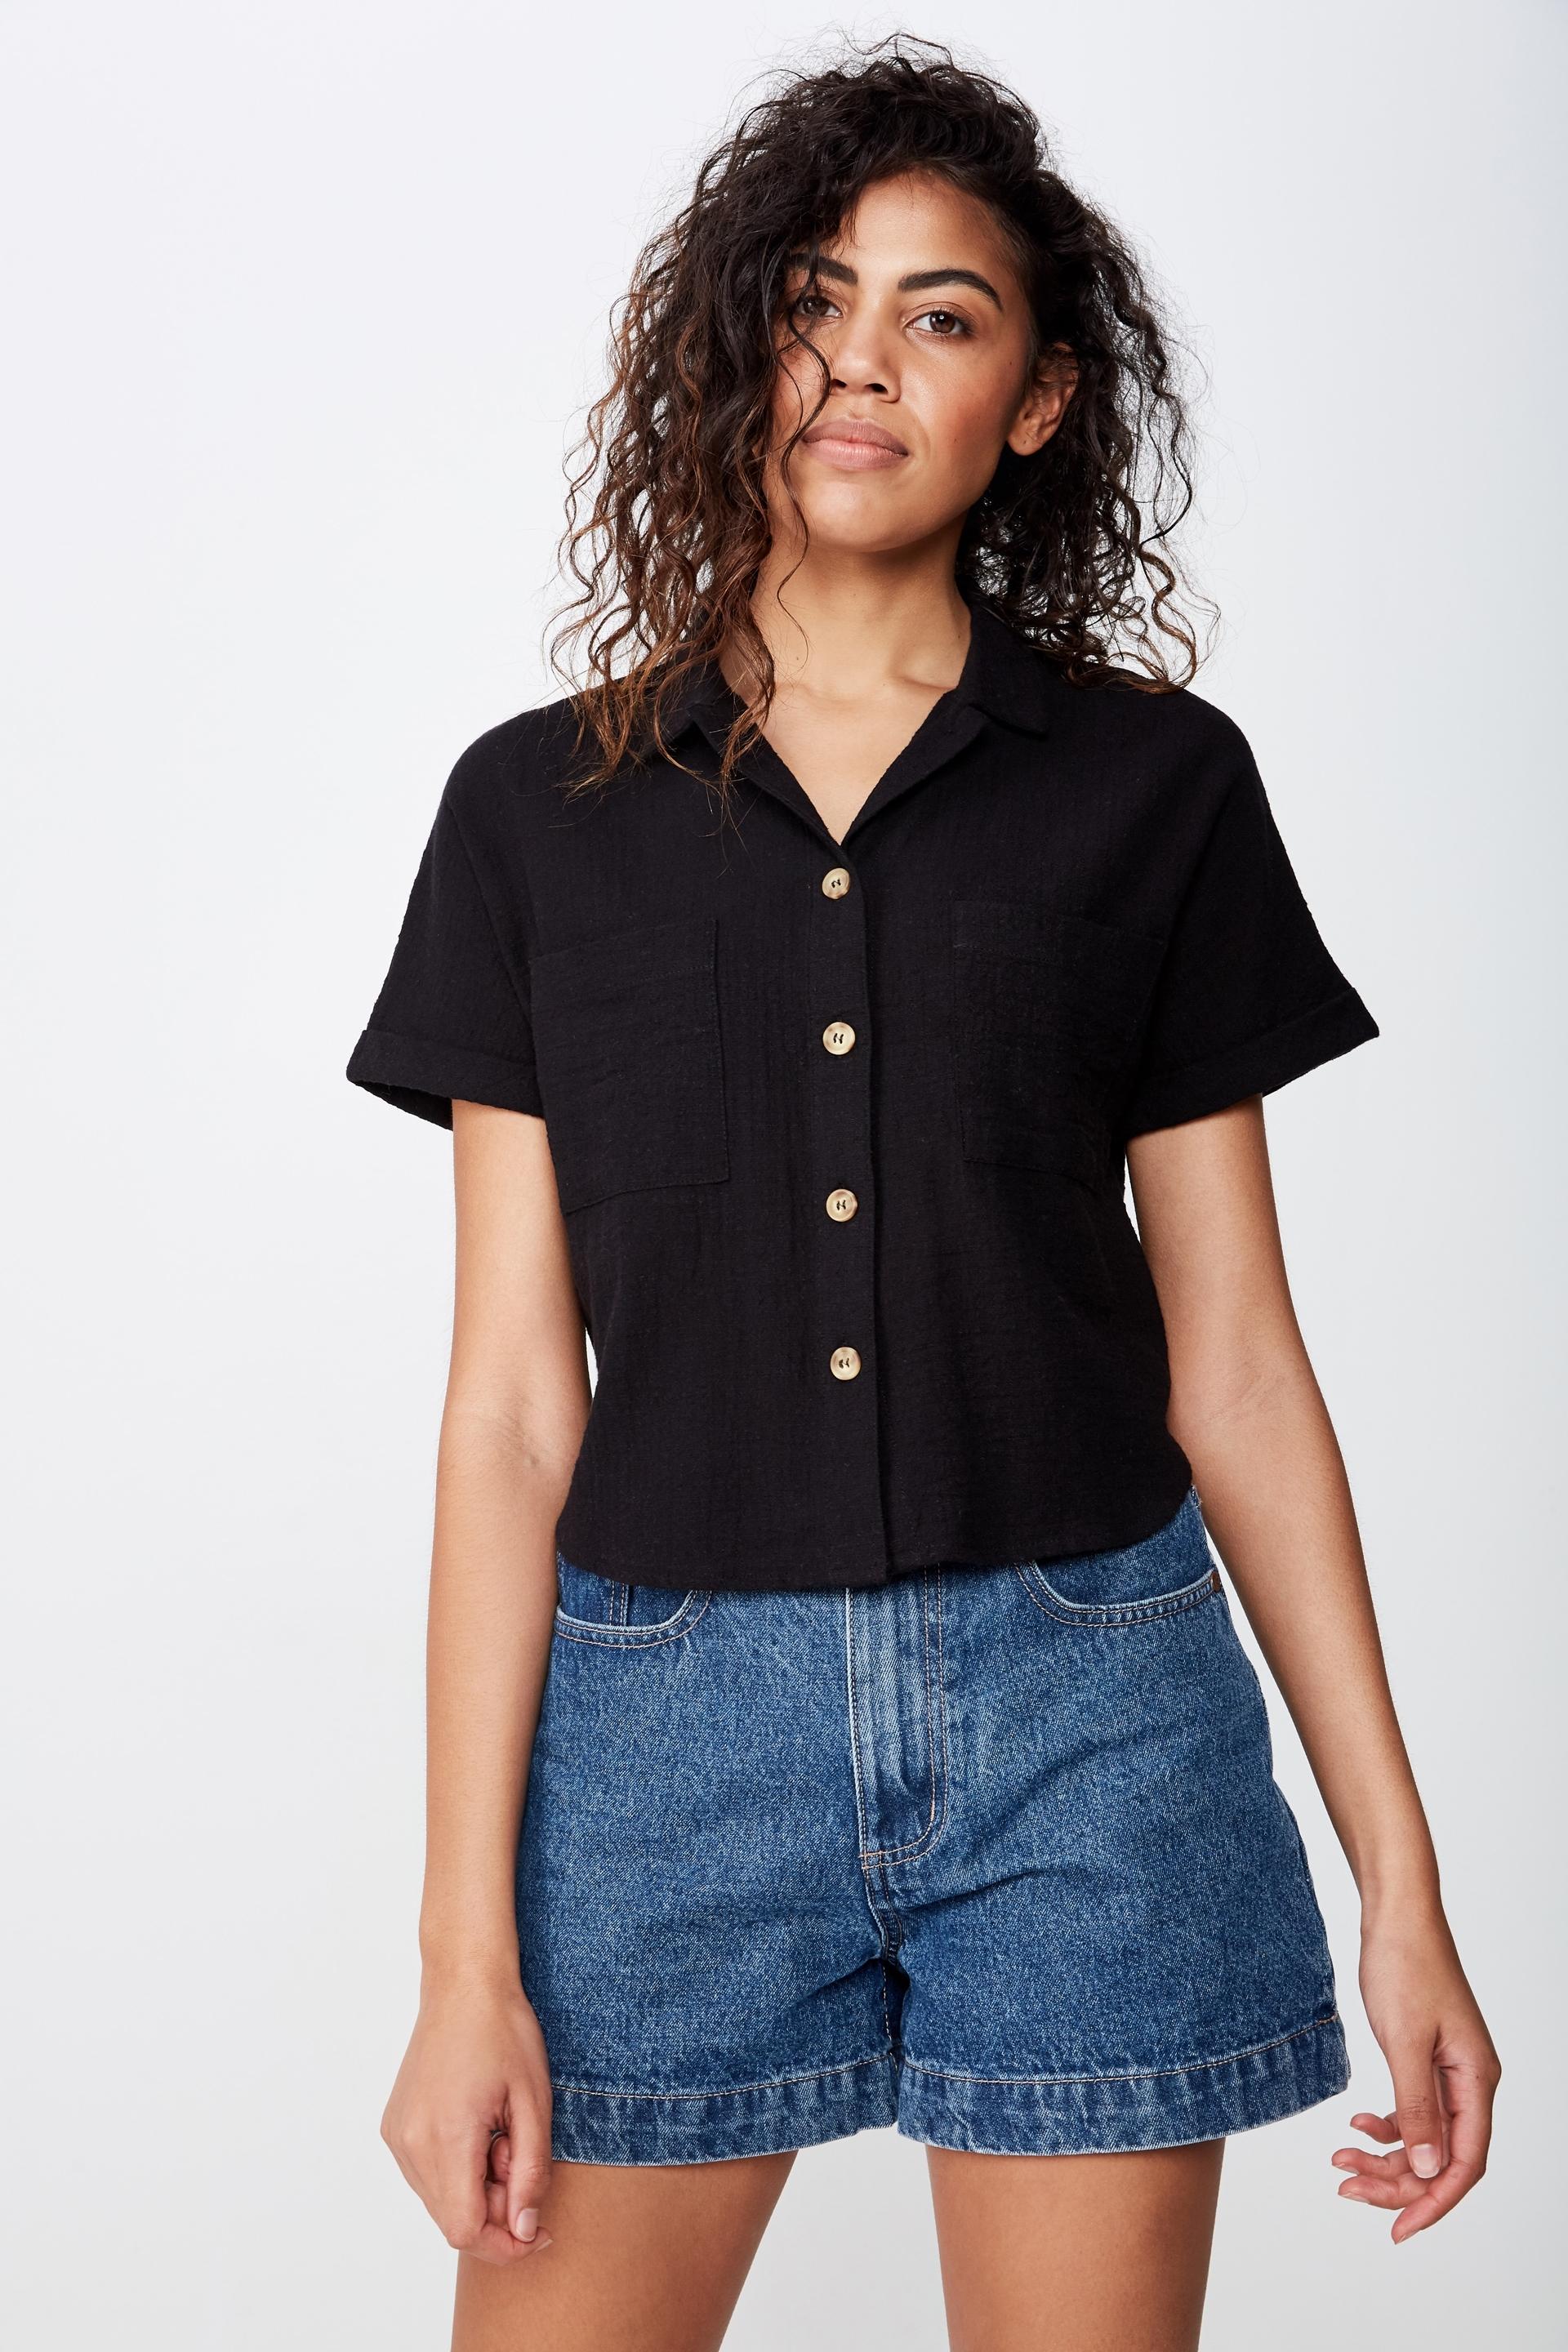 Erin short sleeve shirt - black Cotton On Shirts | Superbalist.com